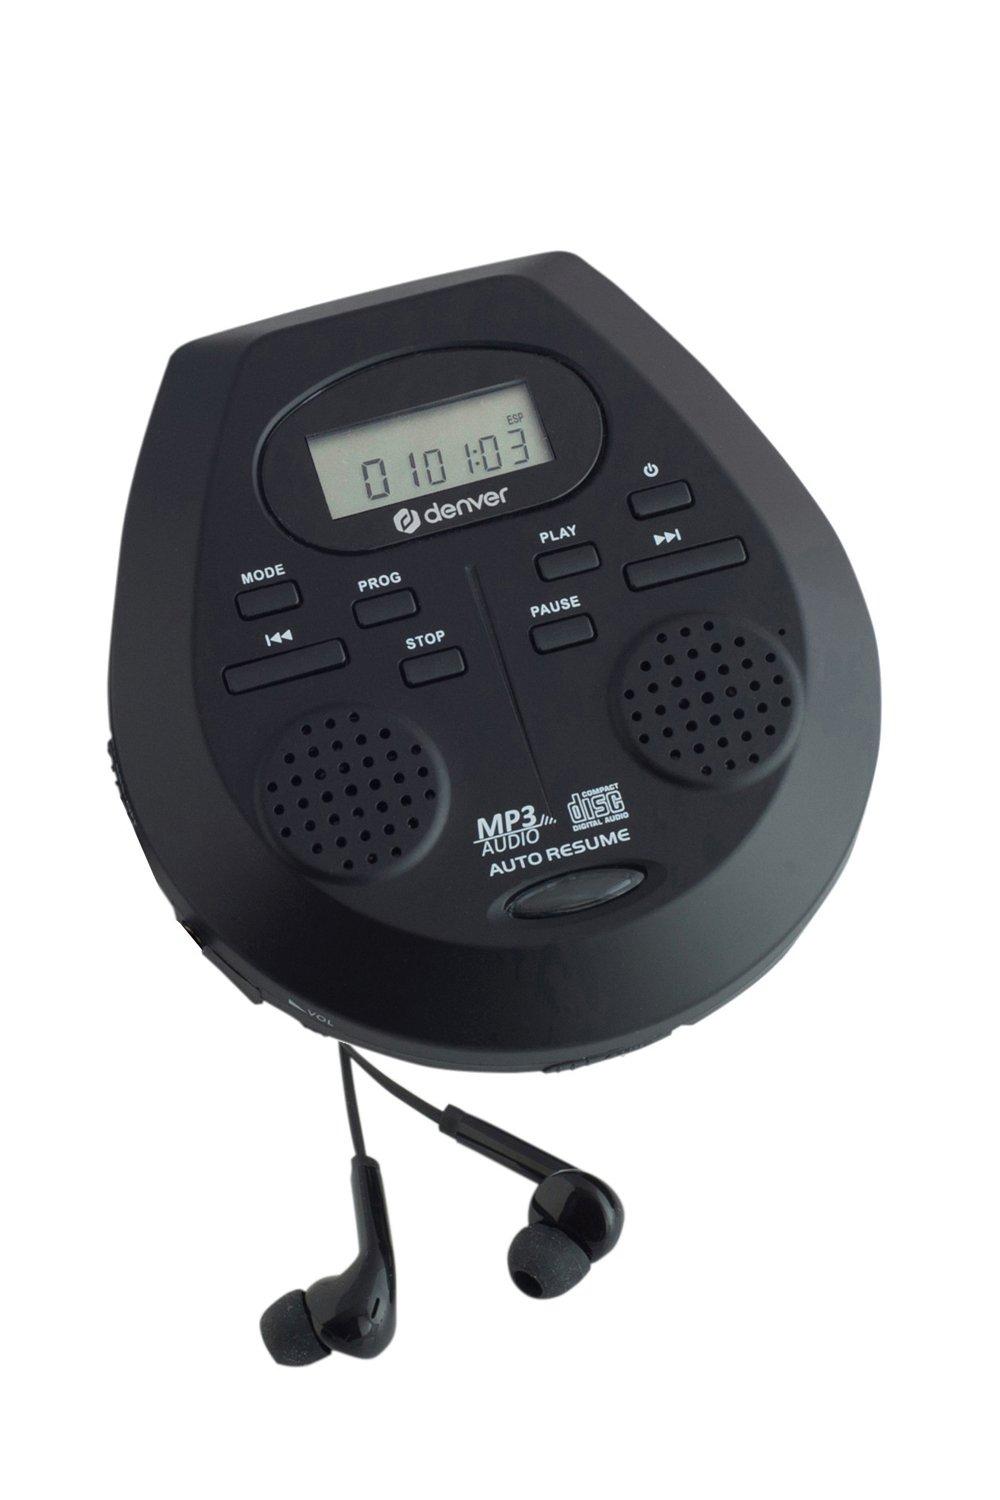 Denver 'DMP-395' Portable CD Player with Speakers CD Walkman MP3 & Audio Book|black